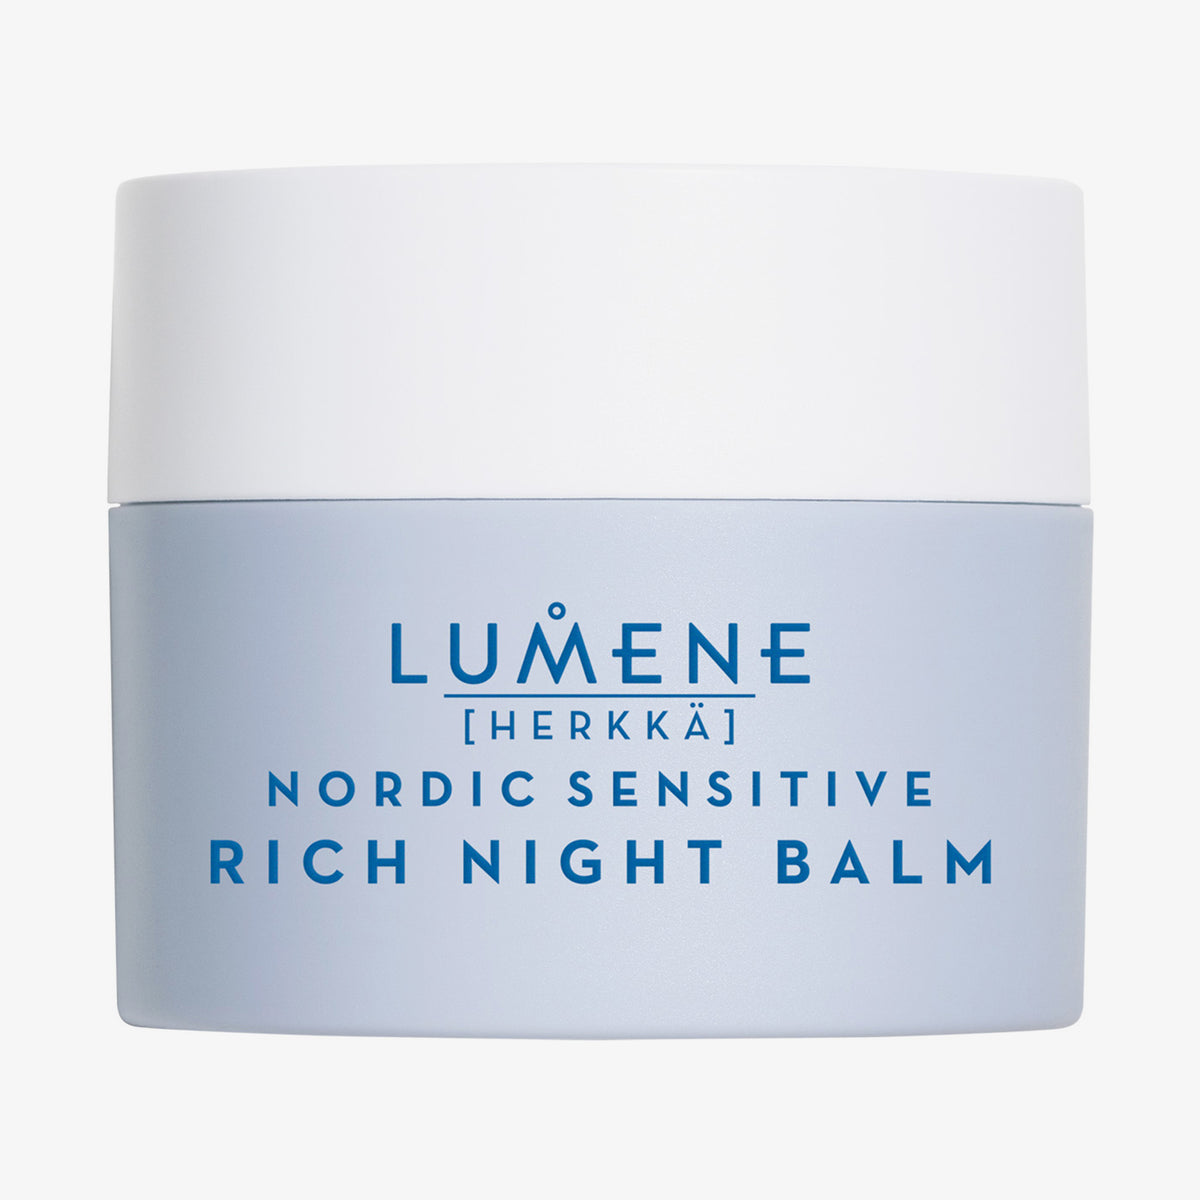 Nordic Sensitive [HERKKÄ] Rich Night Balm